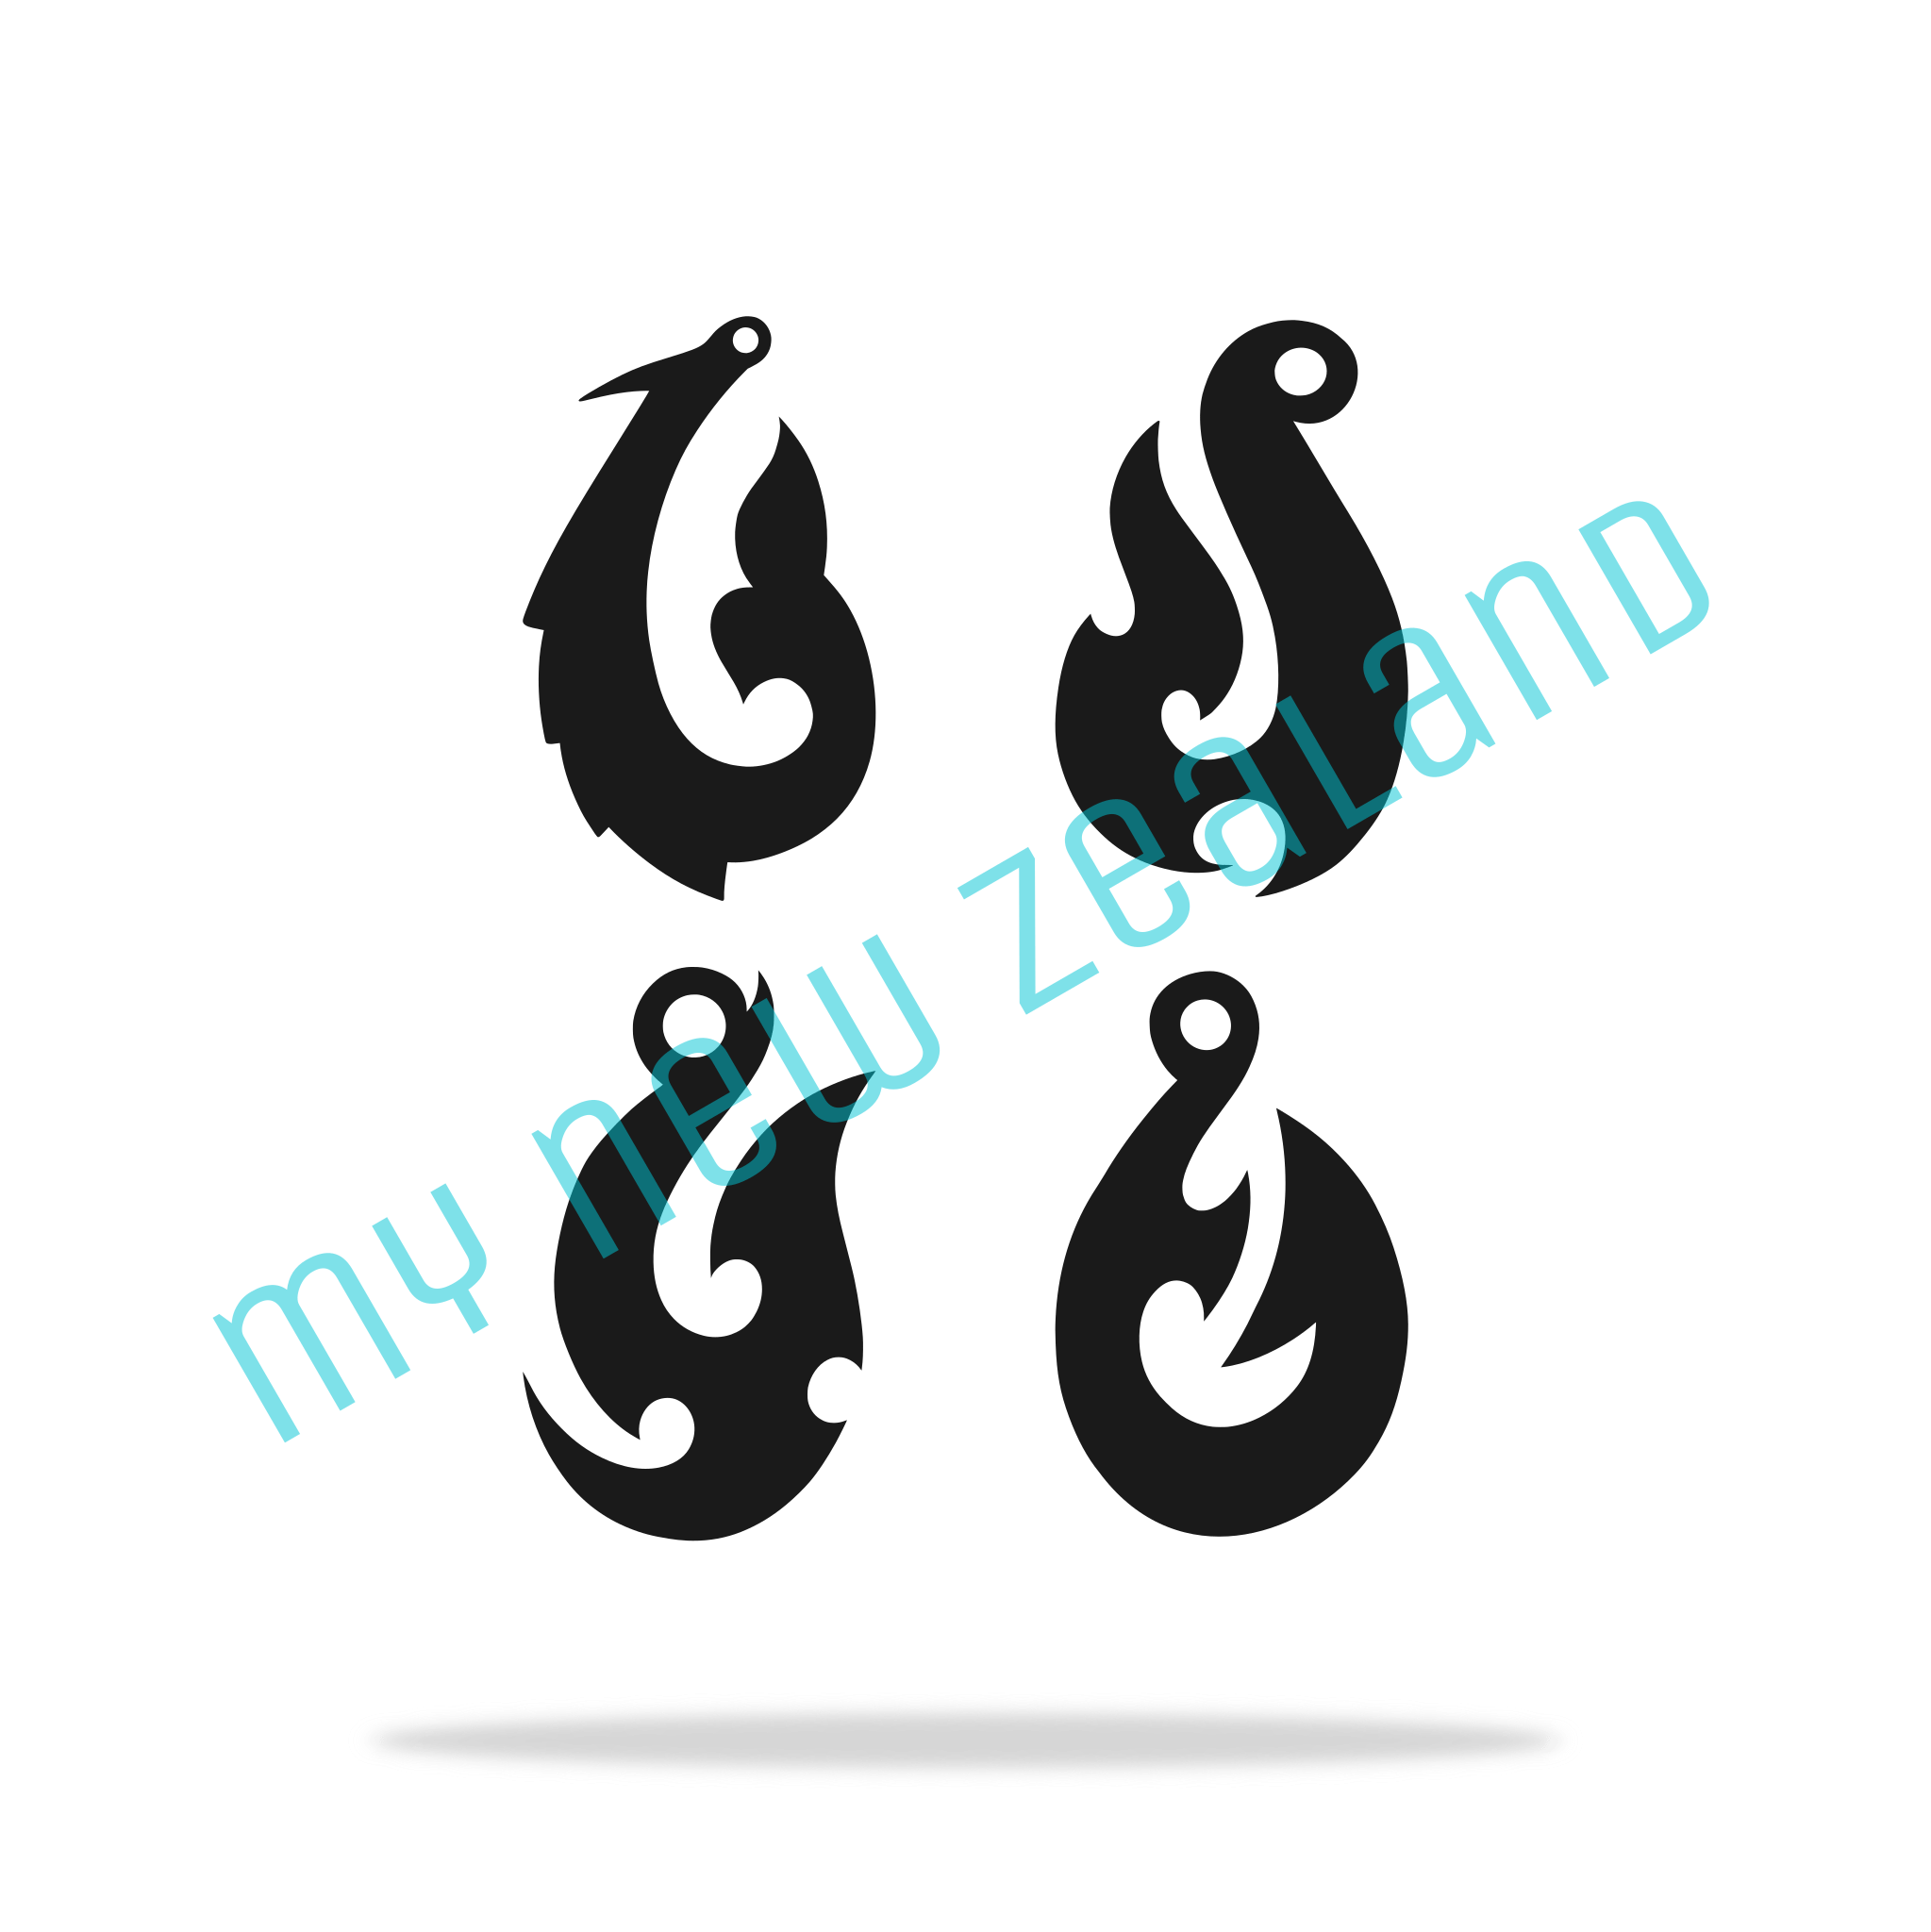 maori symbols for strength